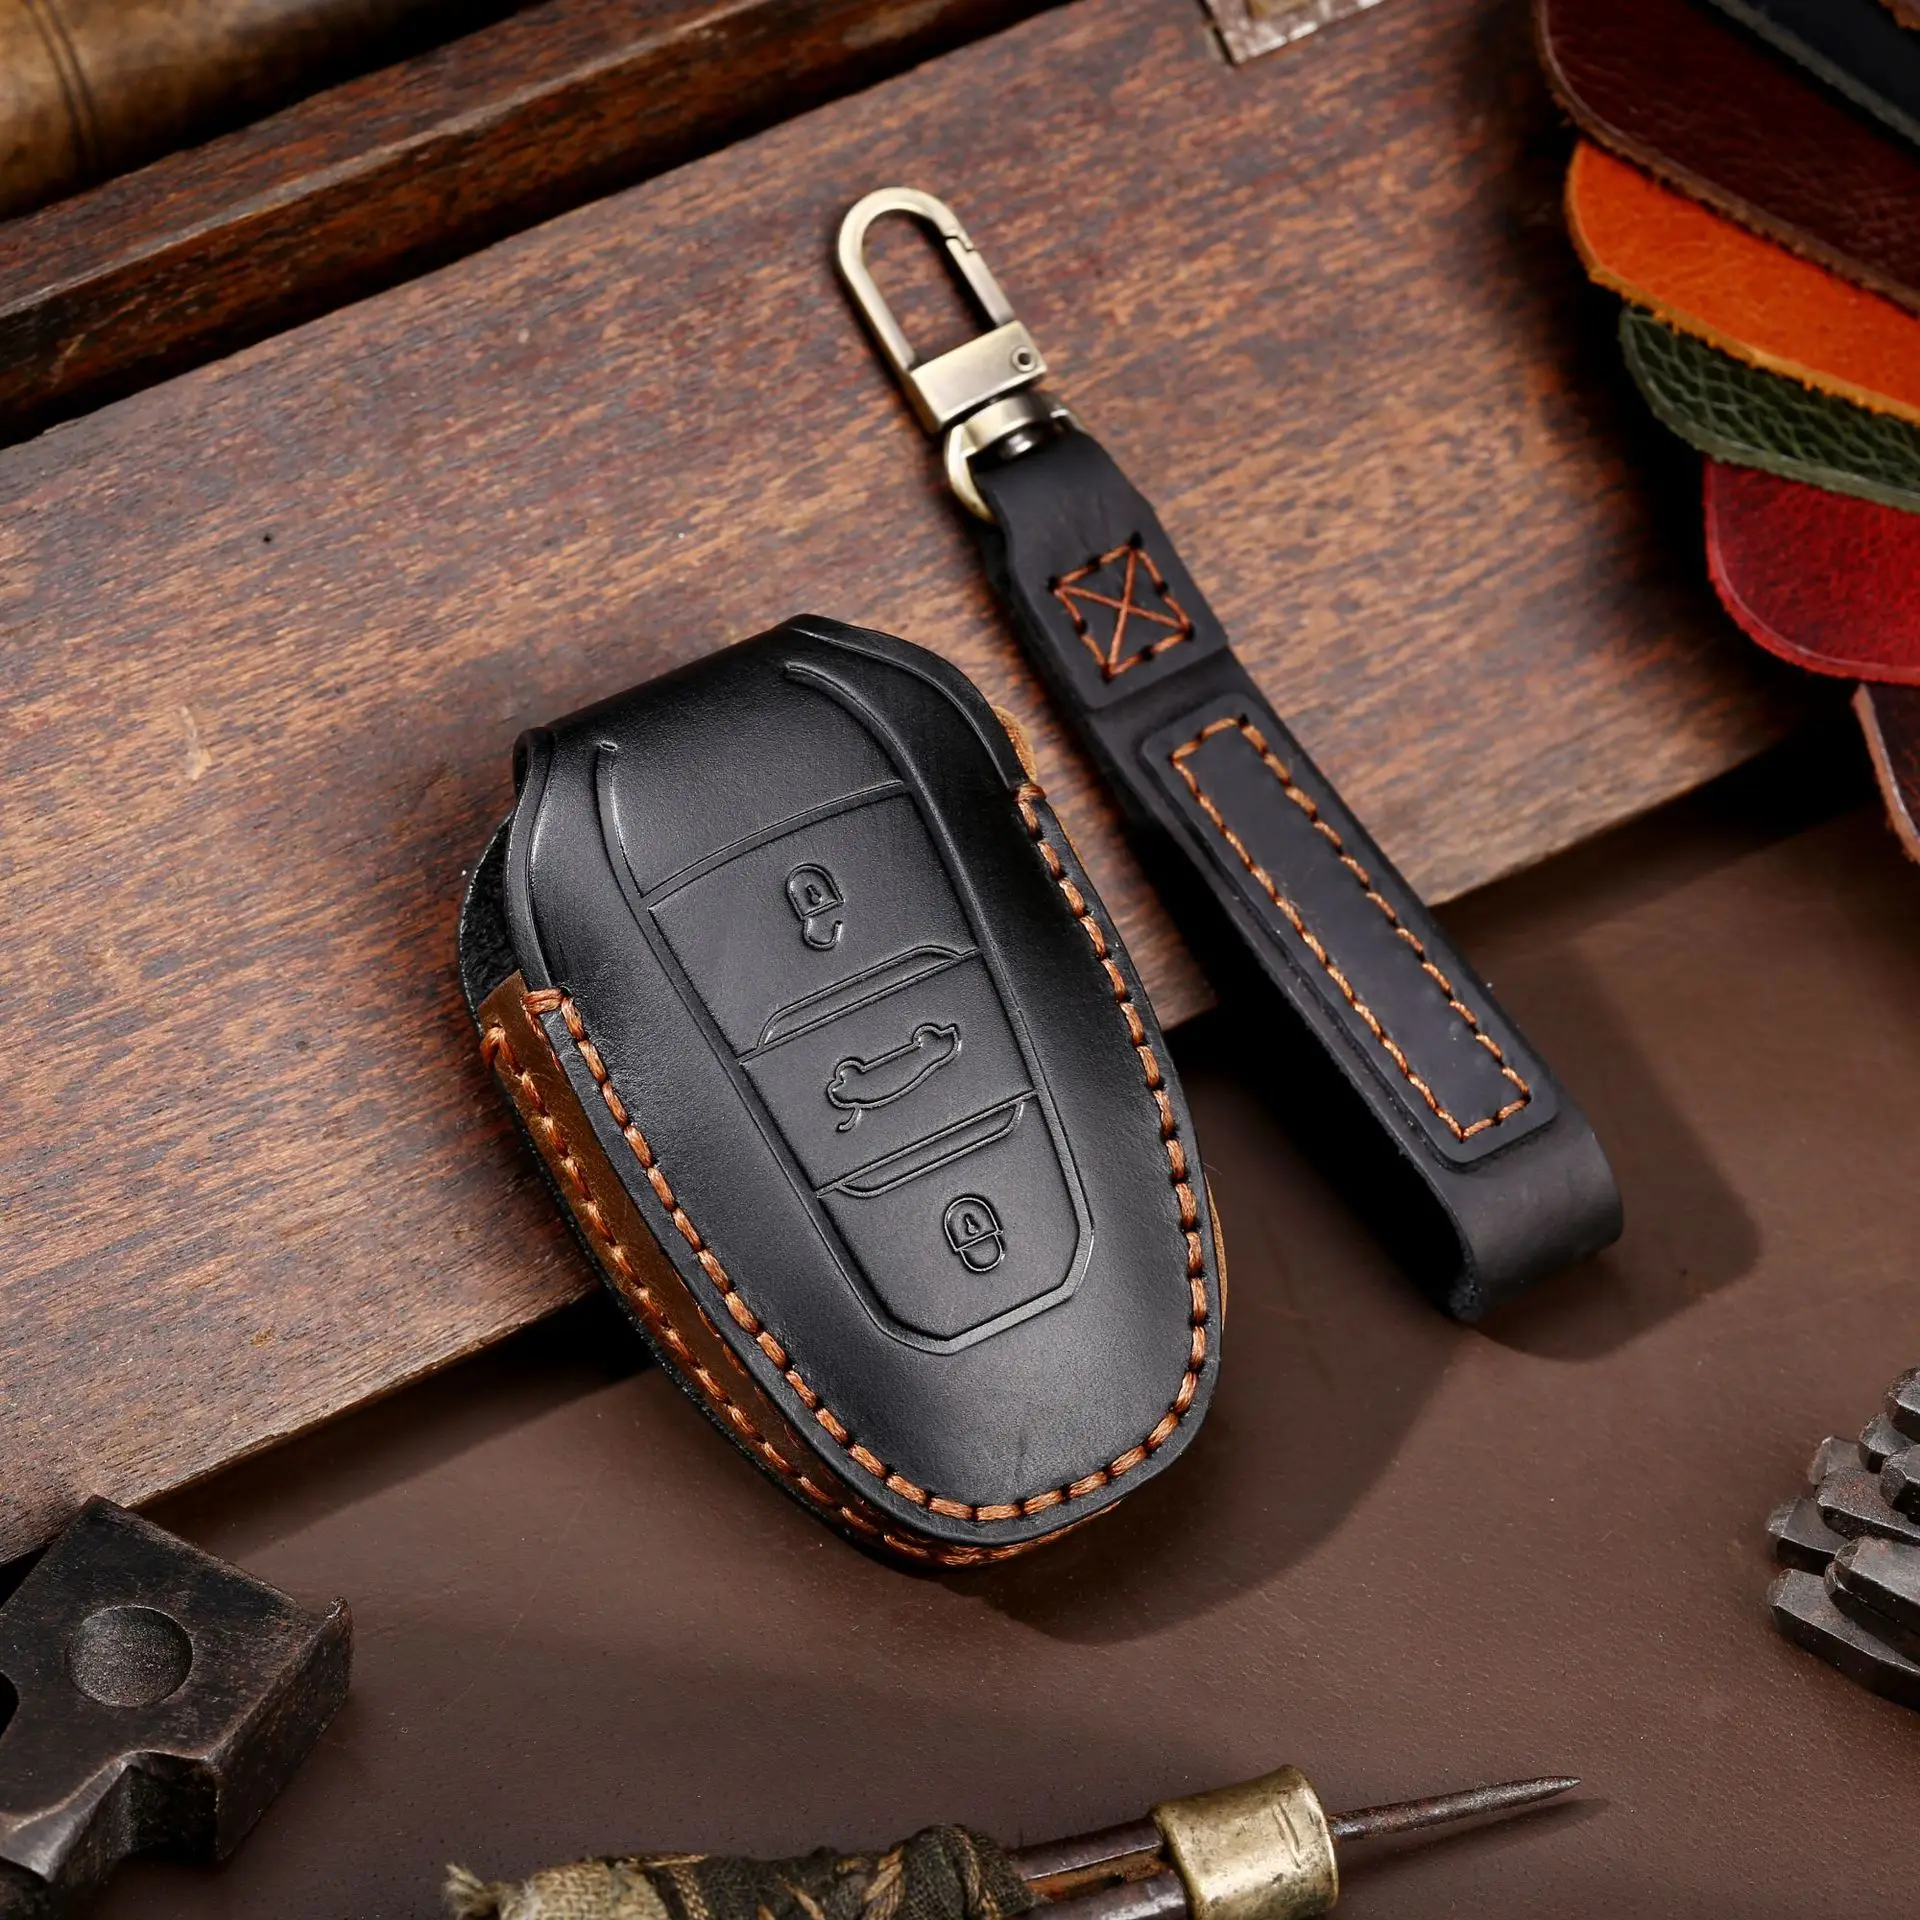 Dongfeng Peugeot Key Case 5008 308 408 508 3008 2008 4008 Automobile  Leather Key Case key holder car key cover